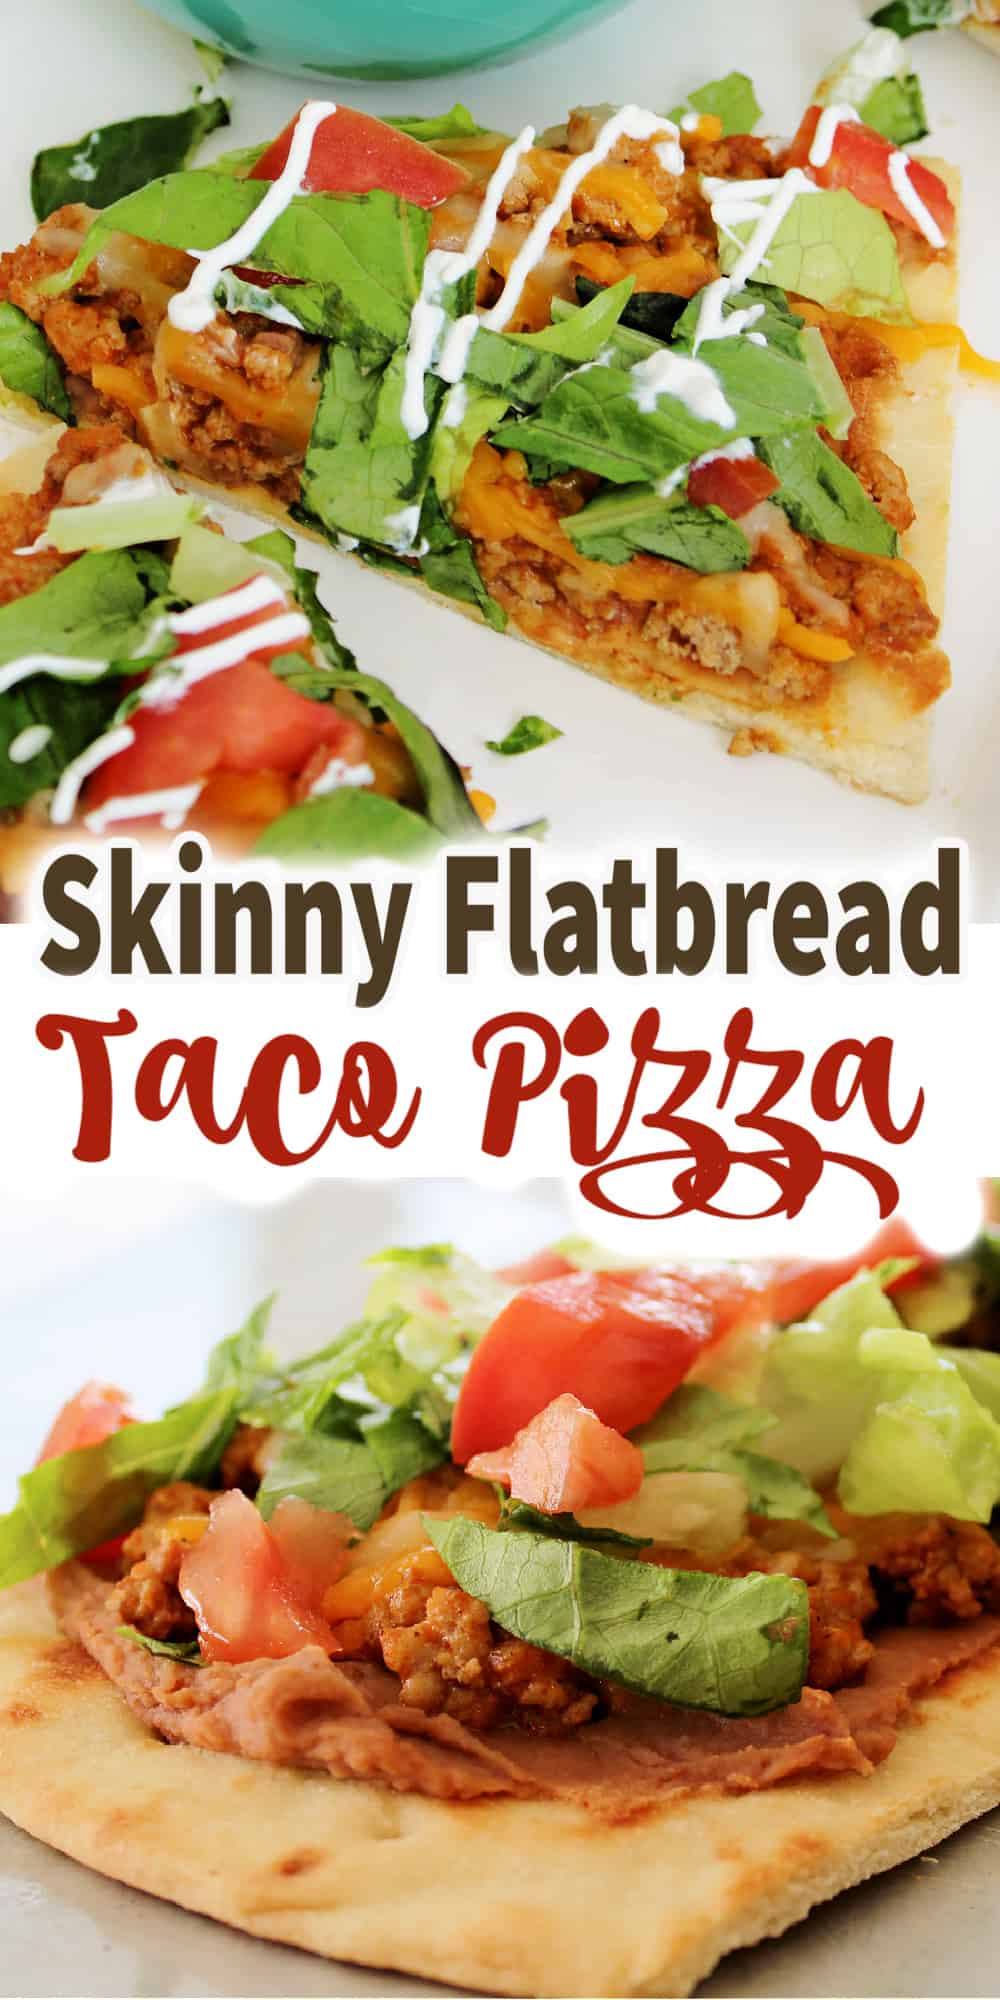 flatbread pizza recipe with text